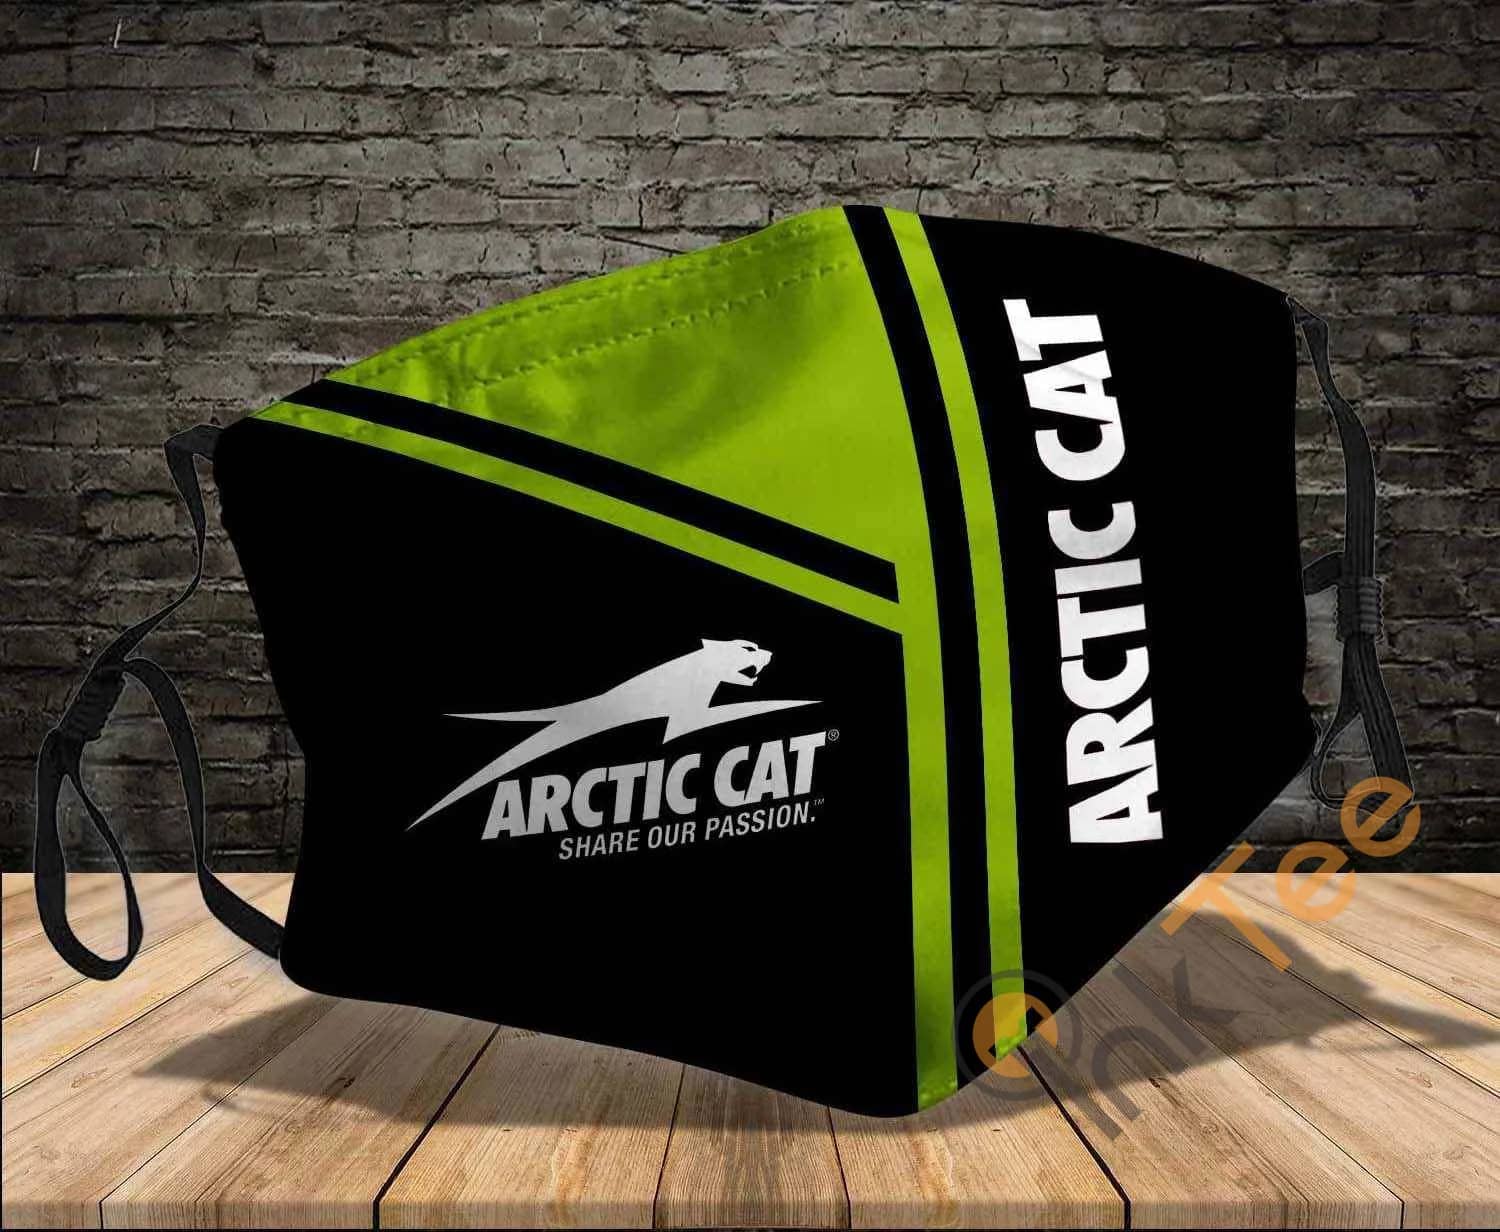 Arctic Cat Washable Reusable Amazon Best Selling Sku338 Face Mask